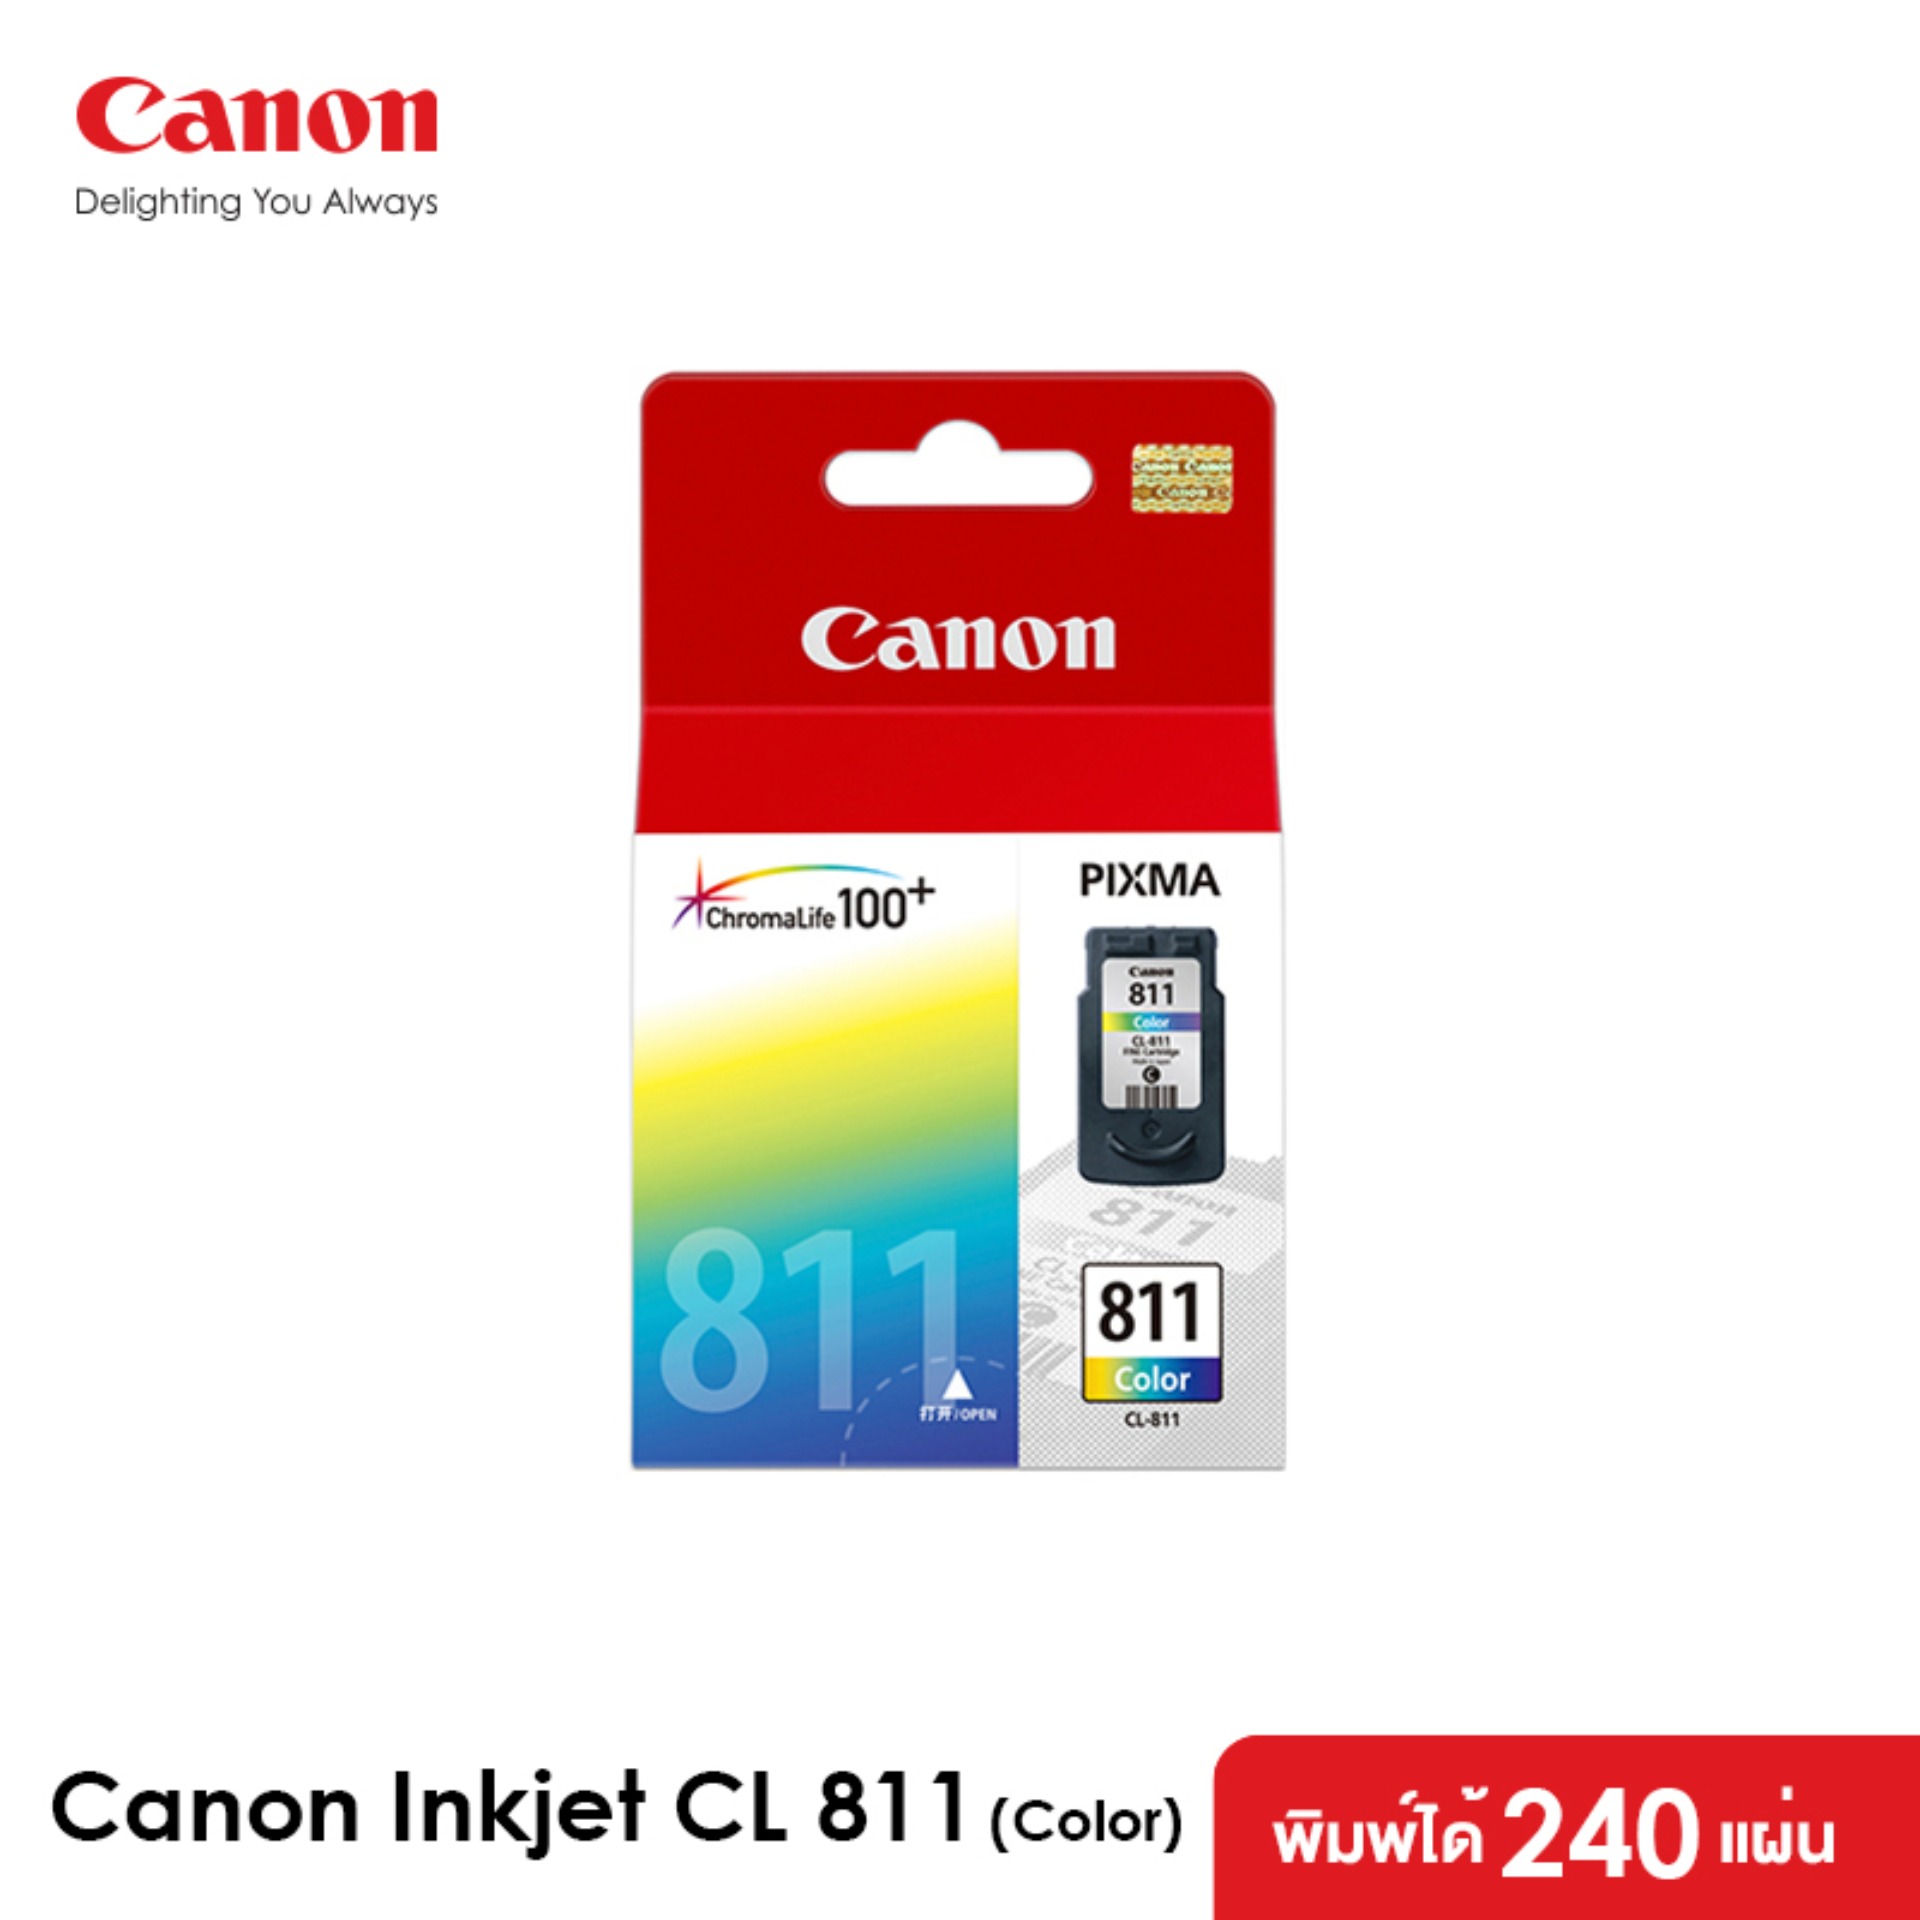 Canon ตลับหมึกอิงค์เจ็ท รุ่น PG 810 Black, CL 811 Color (หมึกแท้100%)